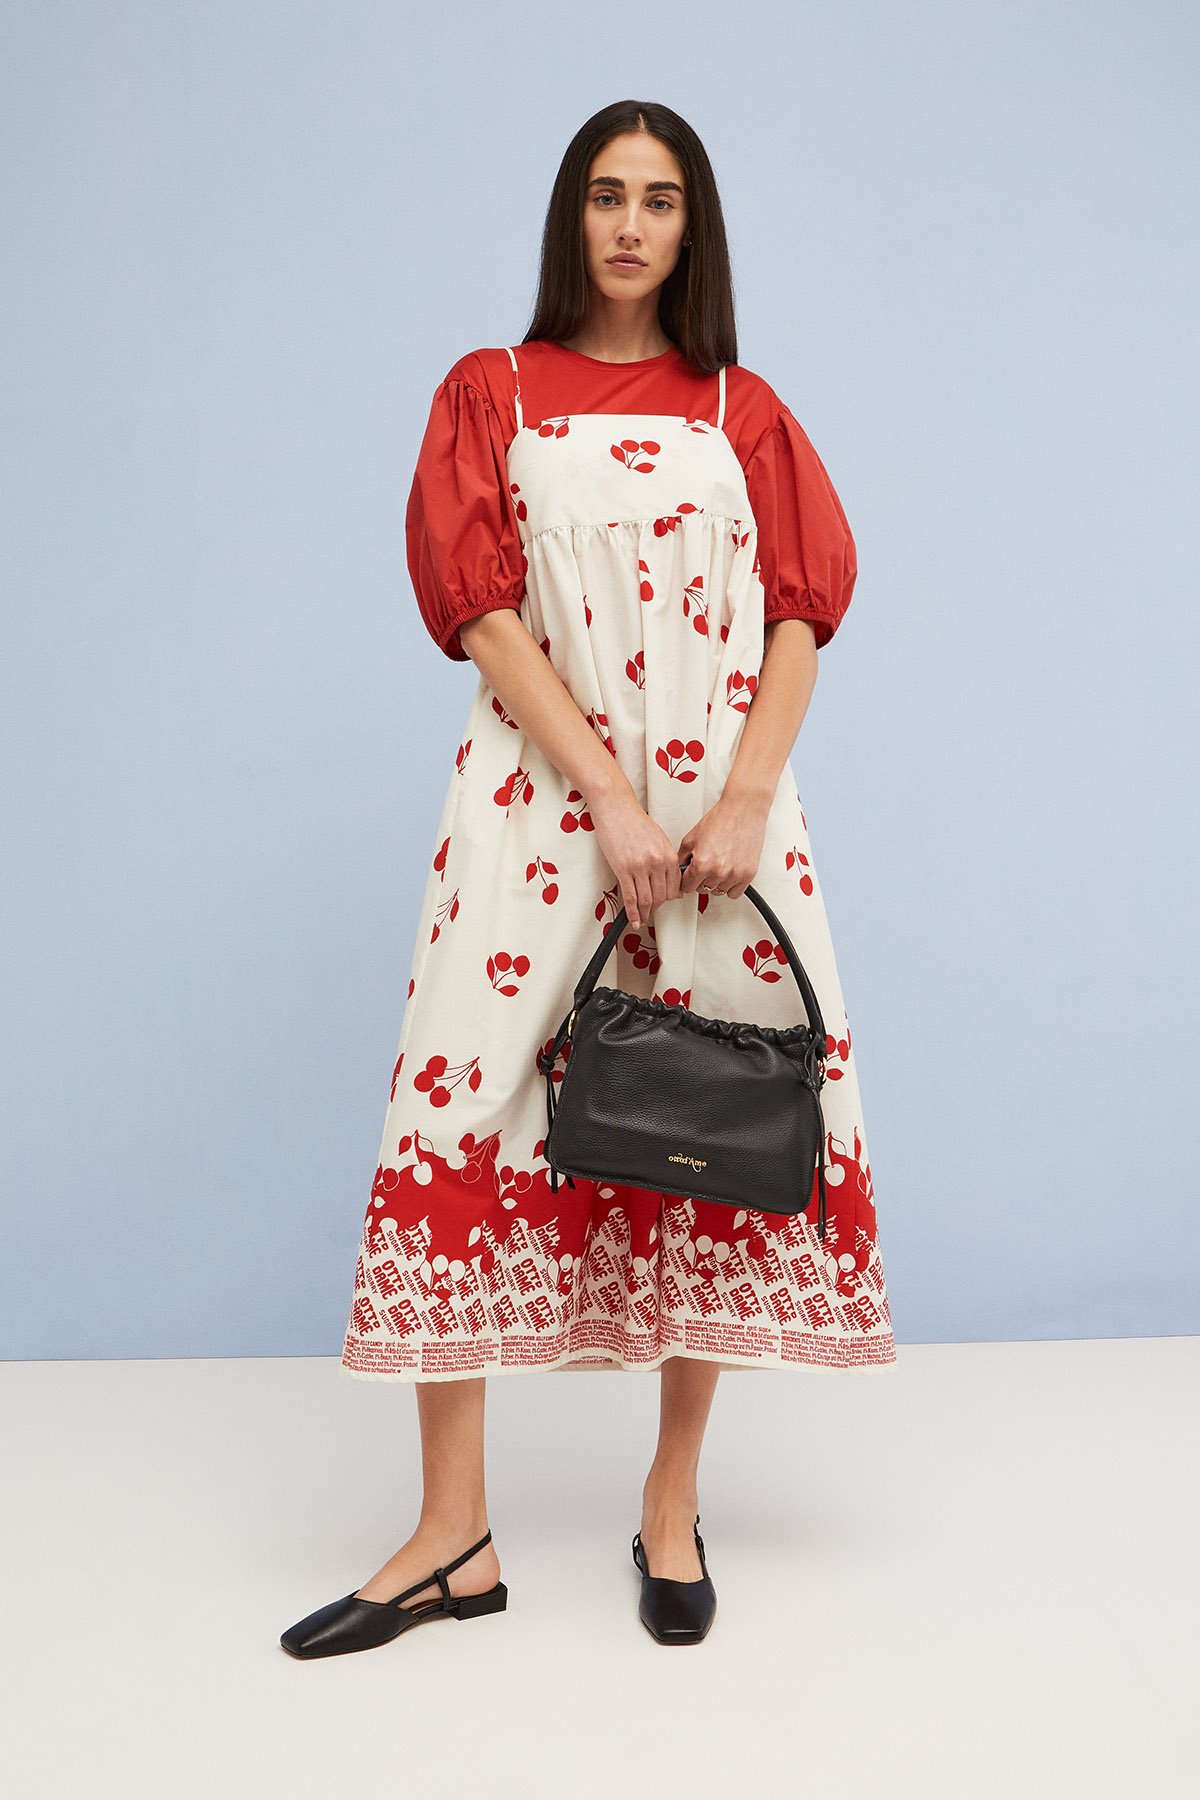 Midi dress with cherries printing